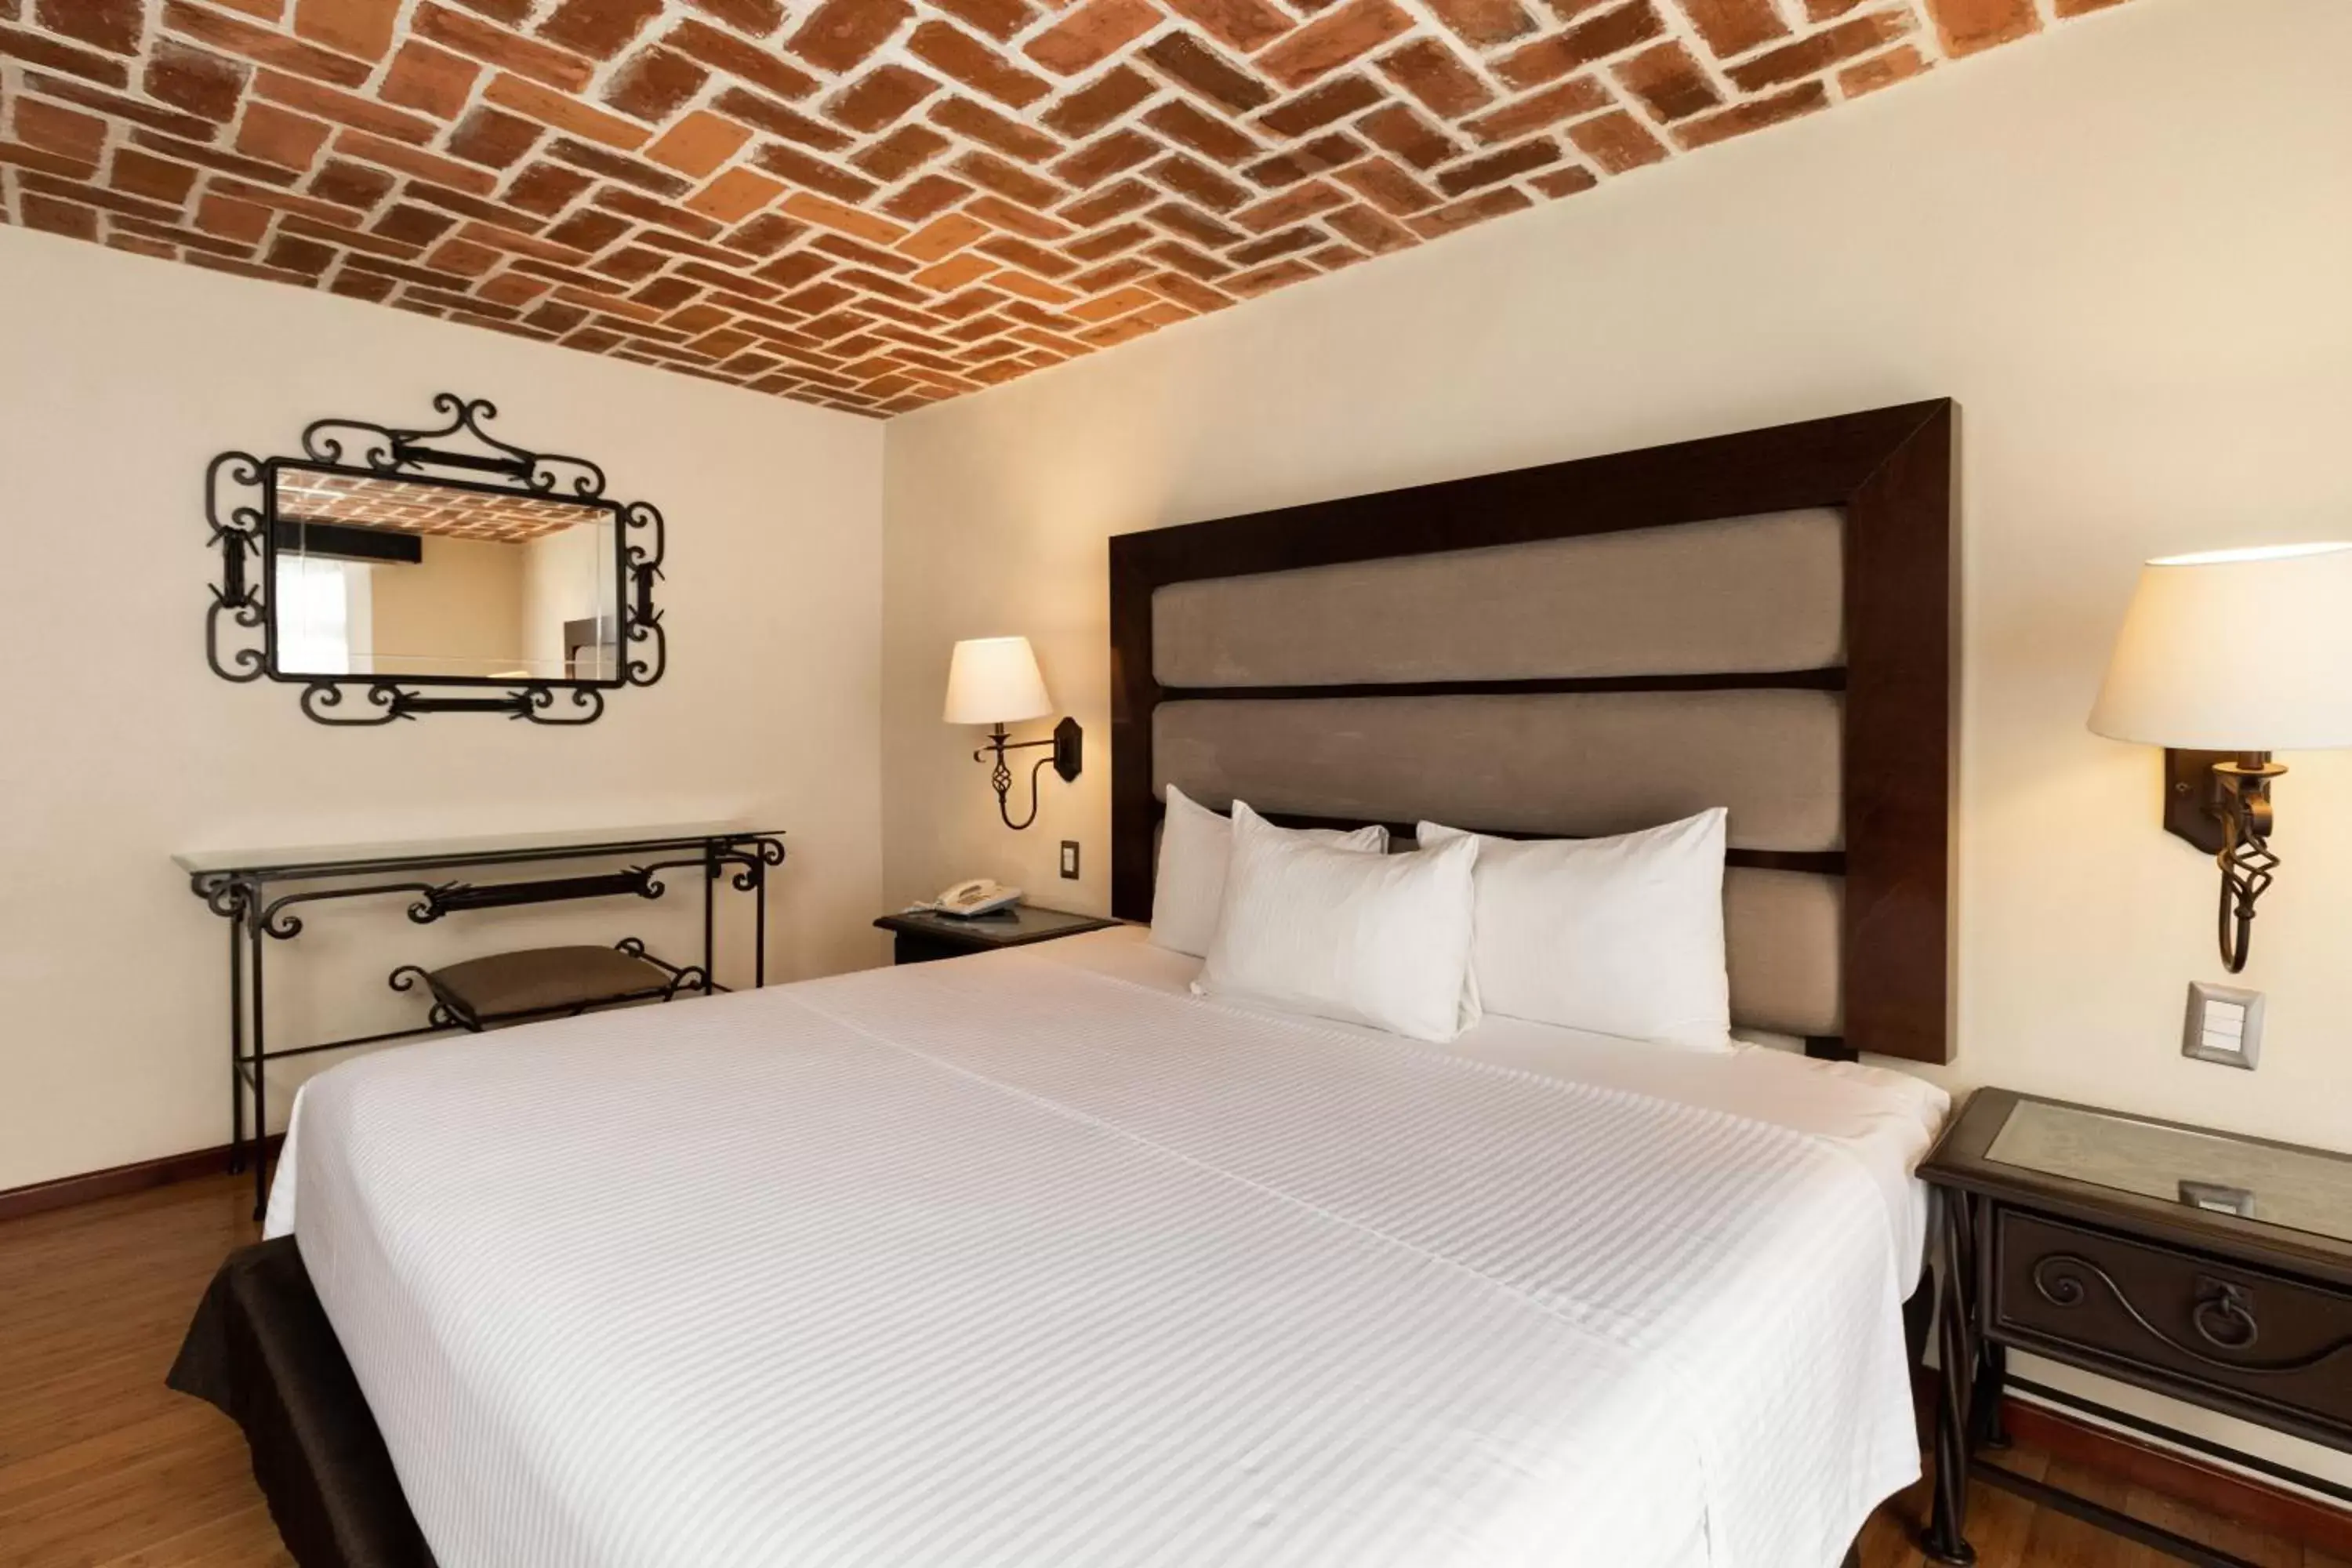 Bed in Hoteles Villa Mercedes San Cristobal